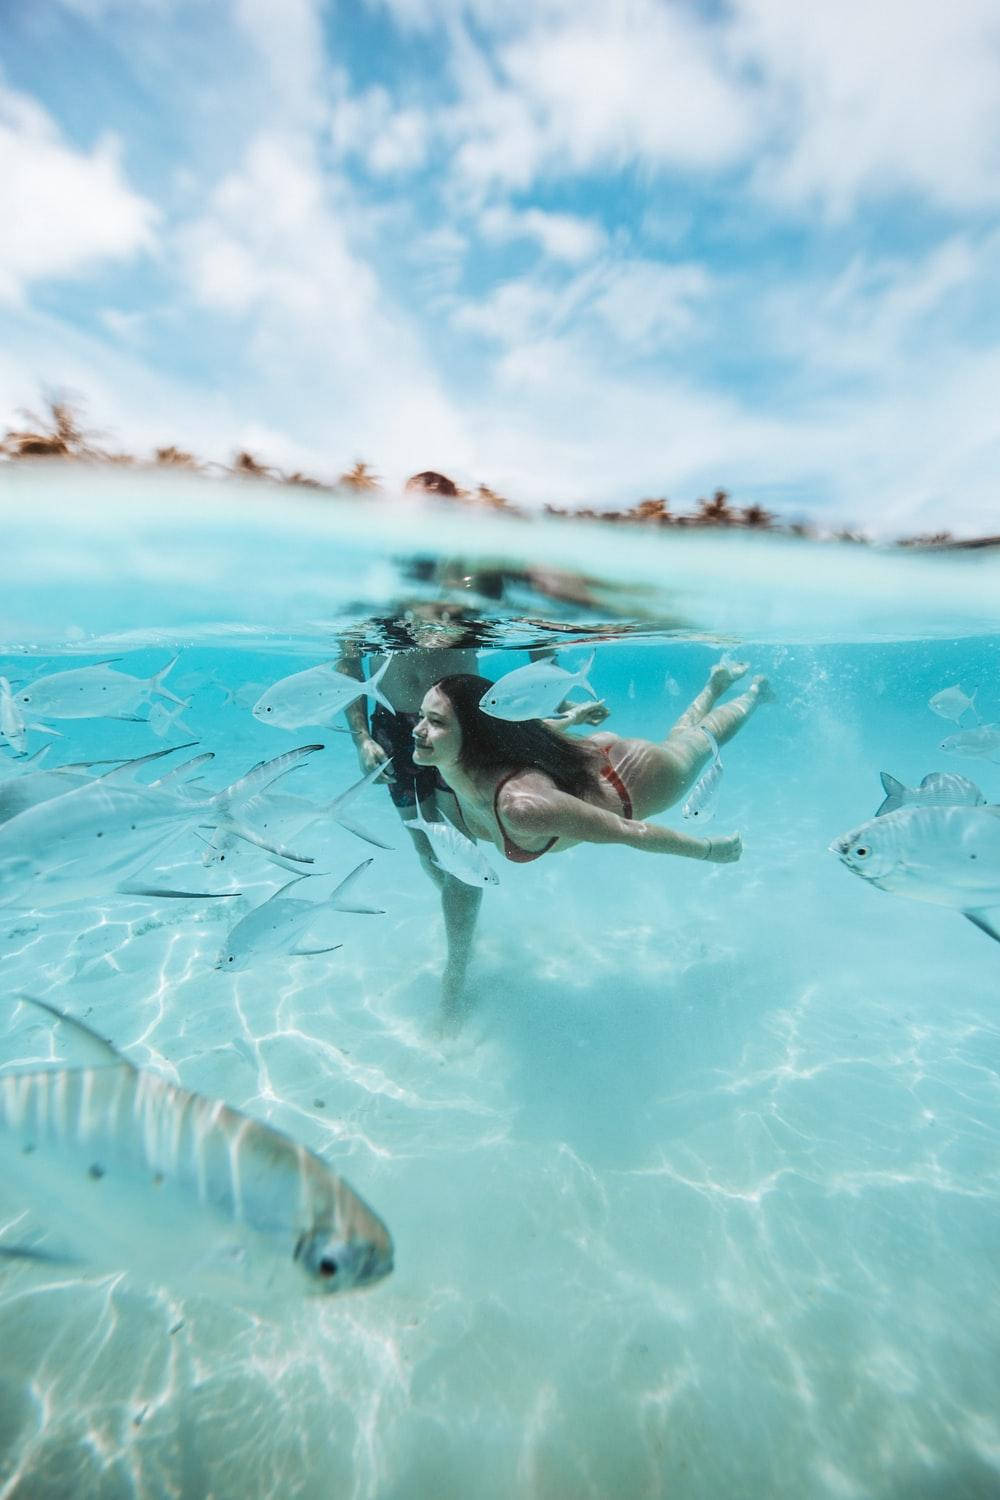 Exploring The Depths - Aesthetic Teal Underwater Scene Wallpaper